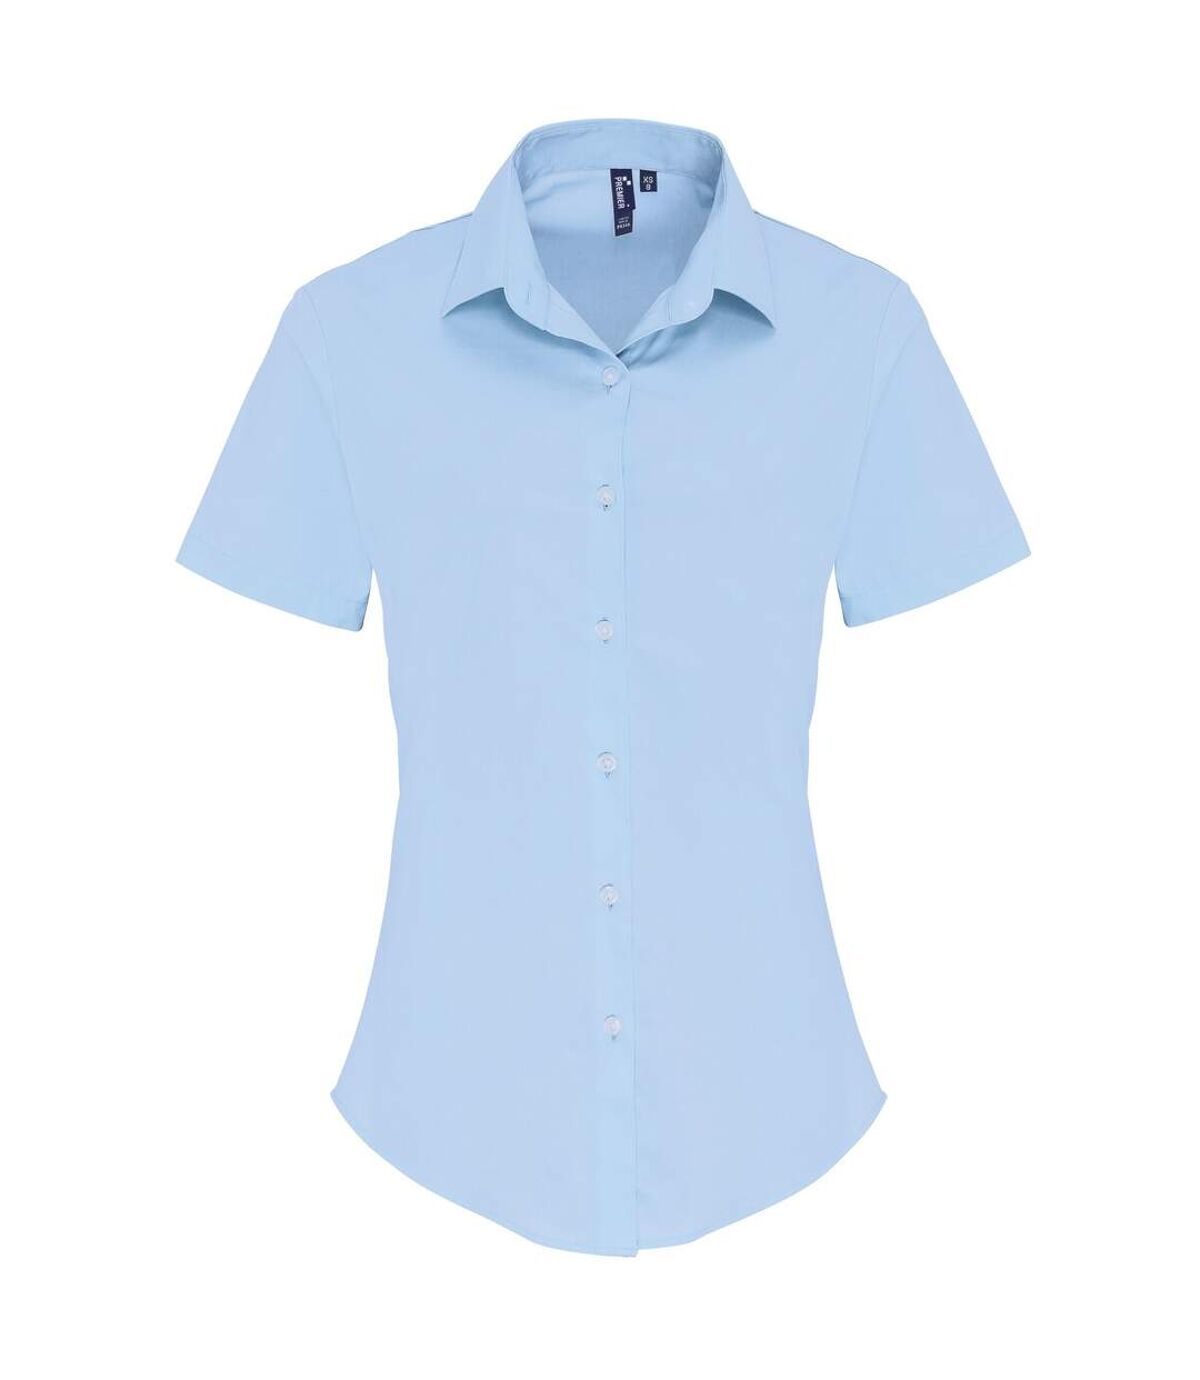 Premier Womens/Ladies Stretch Fit Poplin Short Sleeve Blouse (Pale Blue)